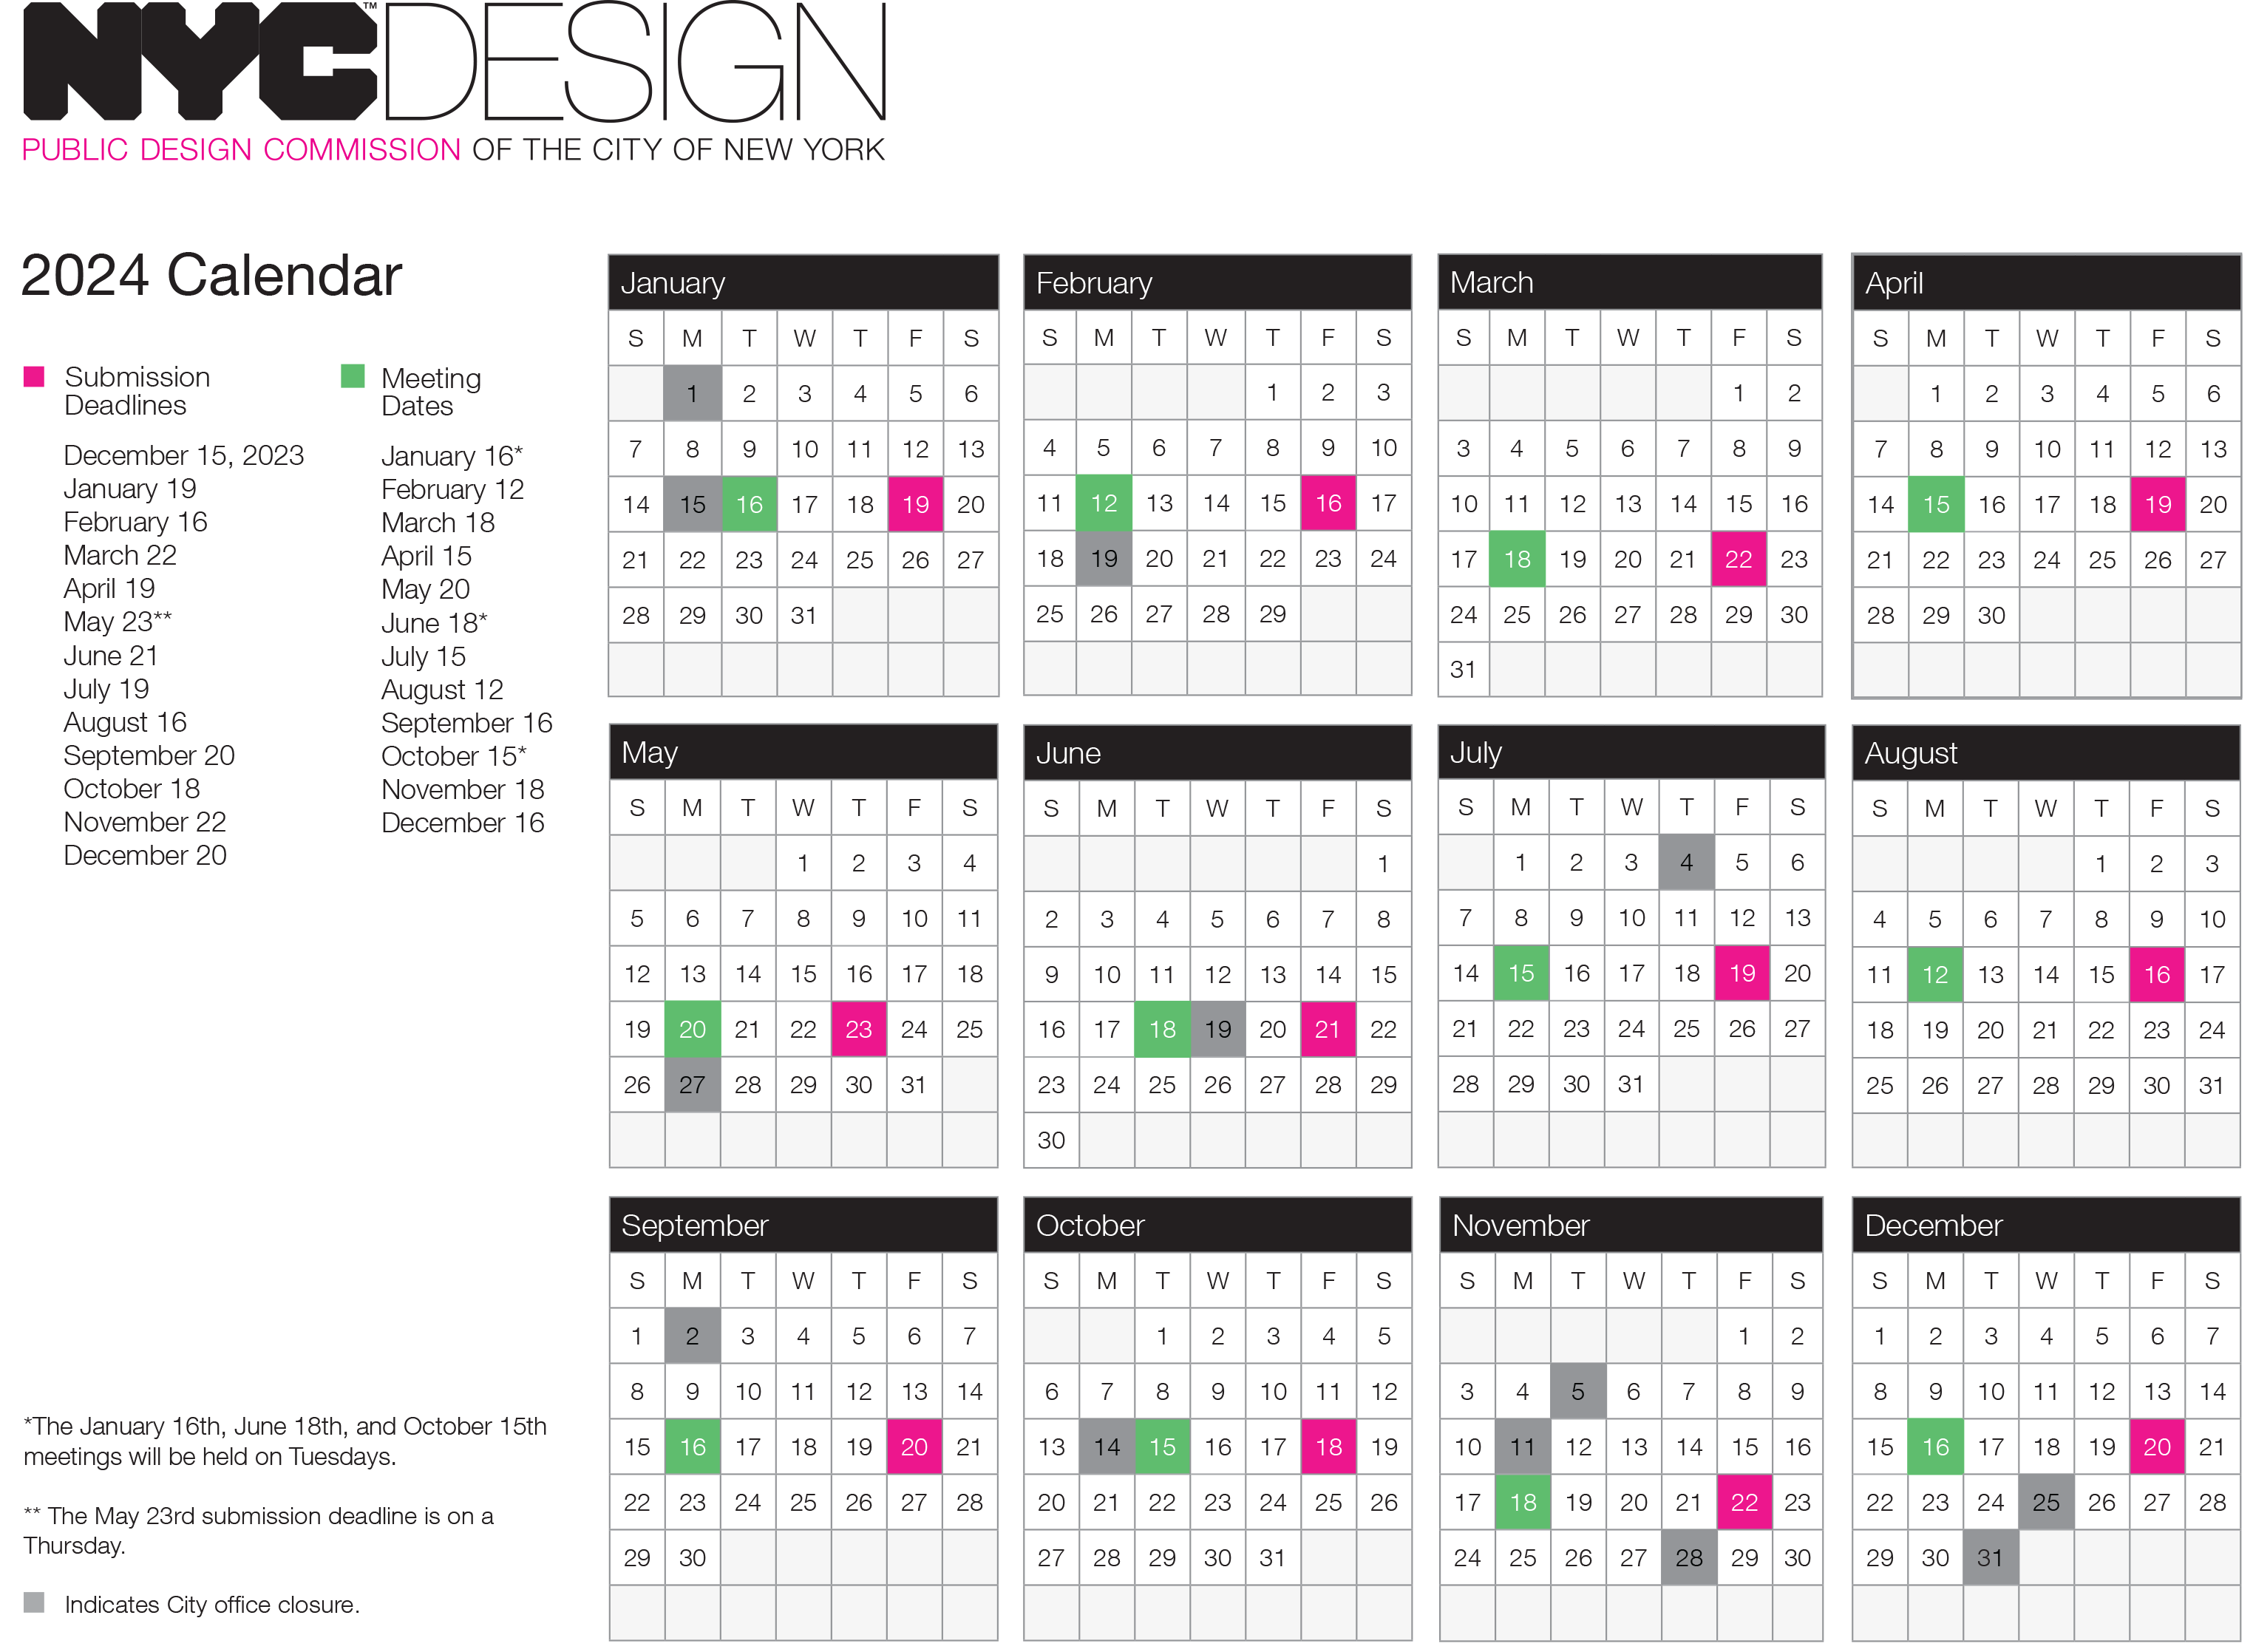 Design Commission 2024 Calendar